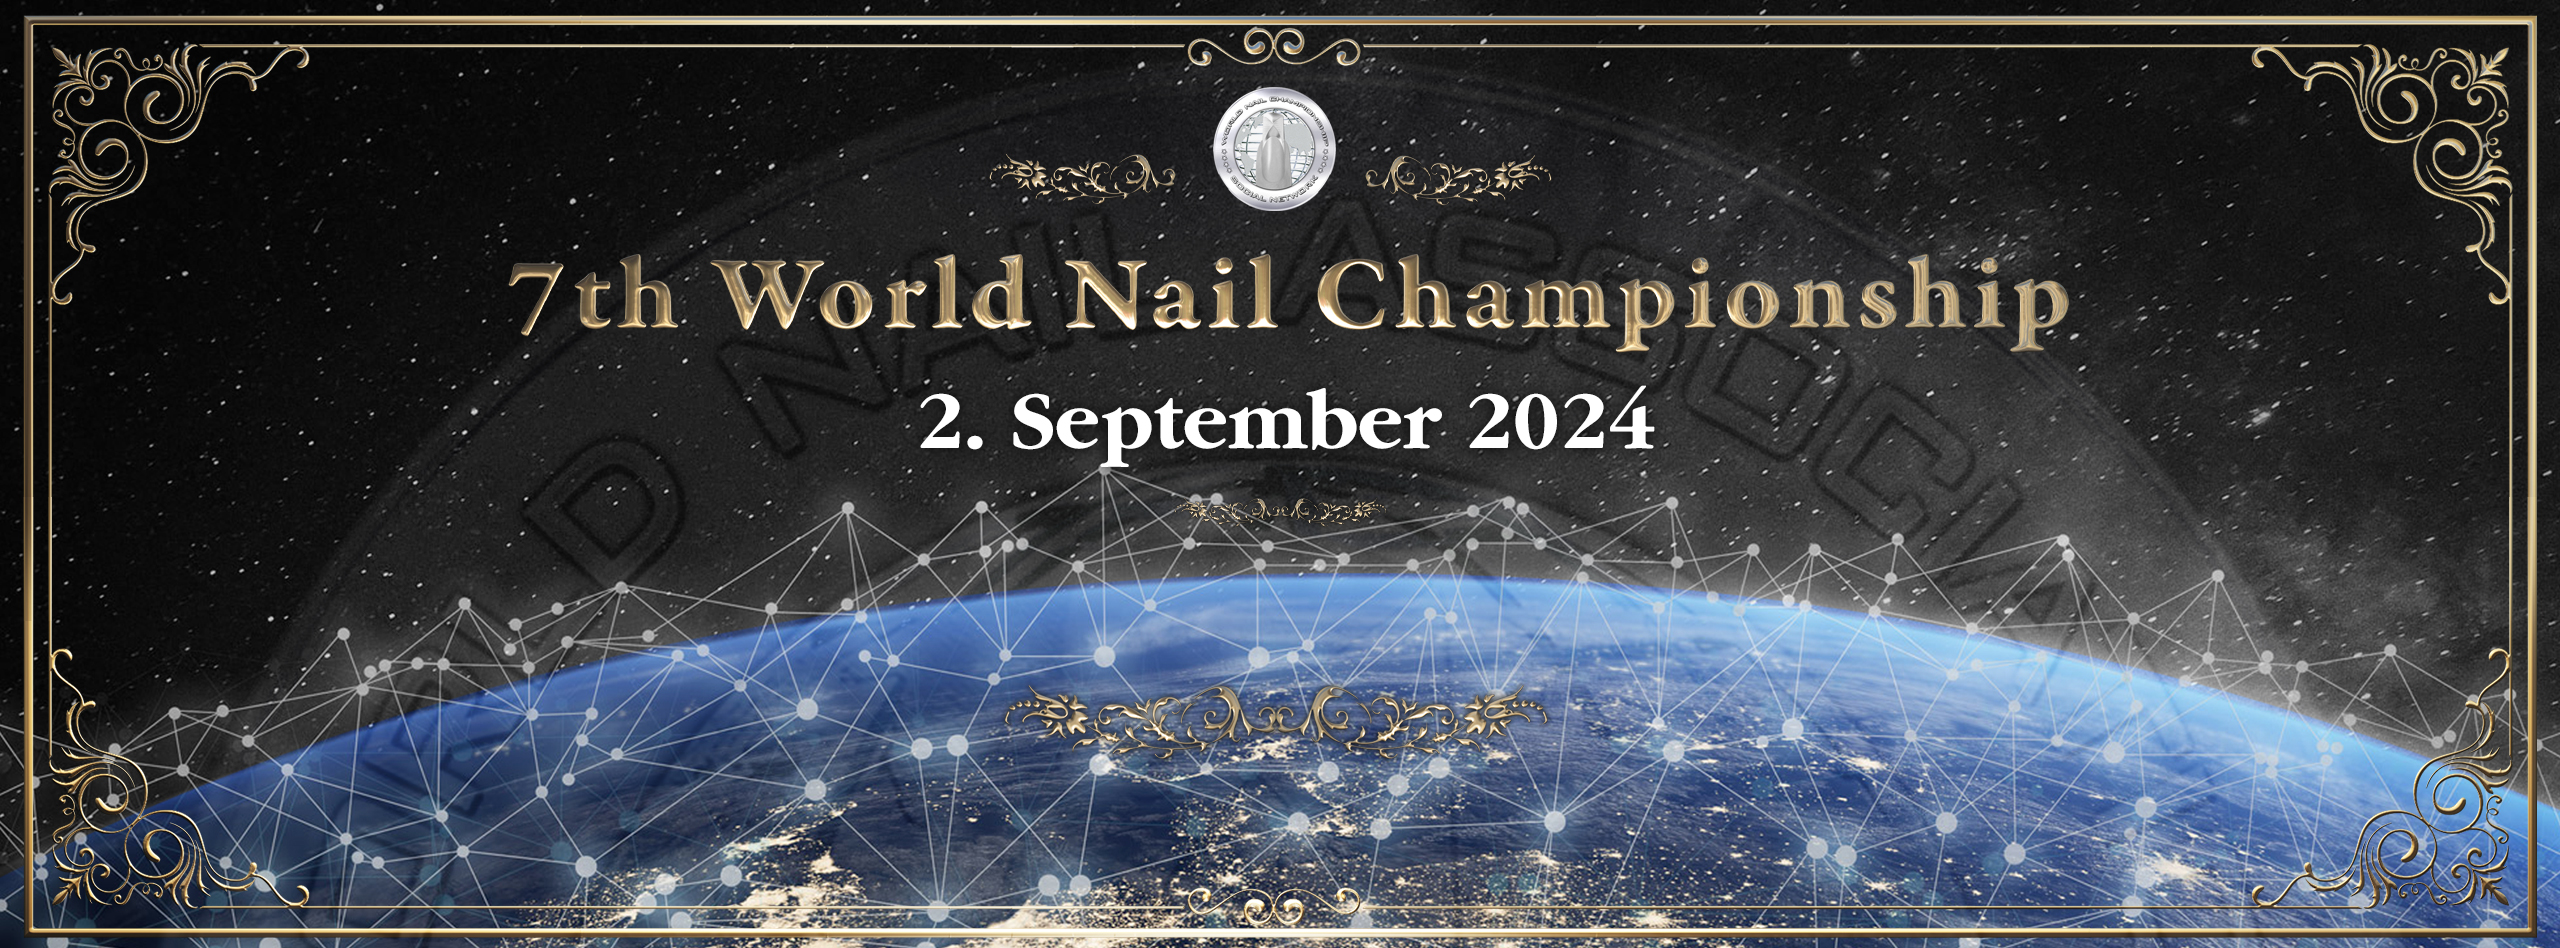 (c) World-nail-championship.com